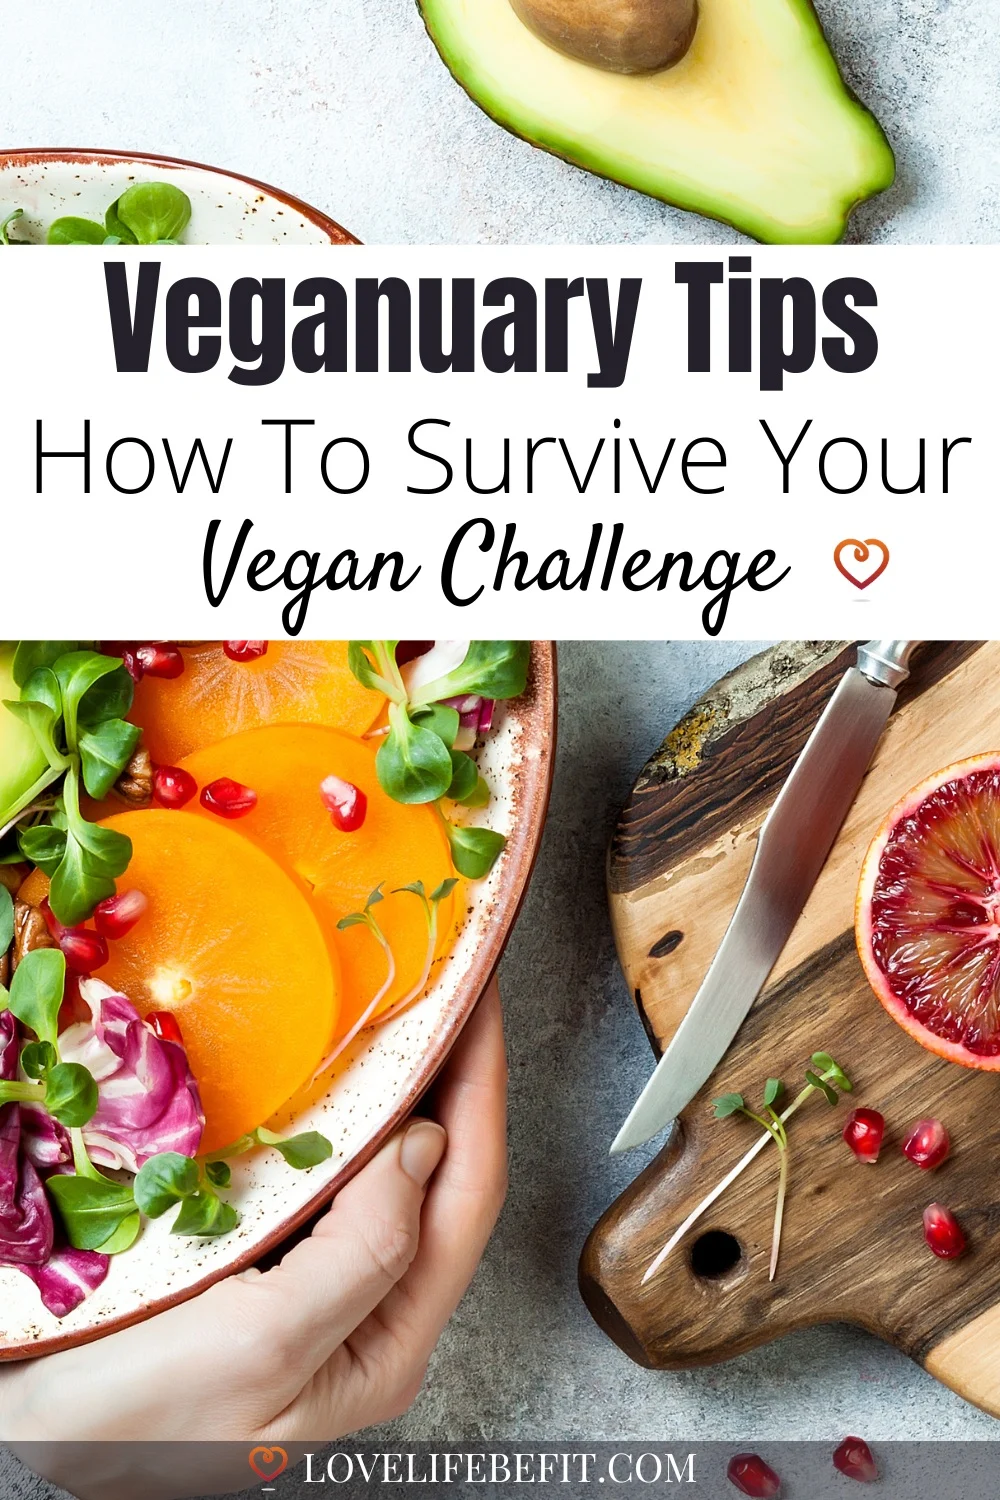 Veganuary tips and recipes